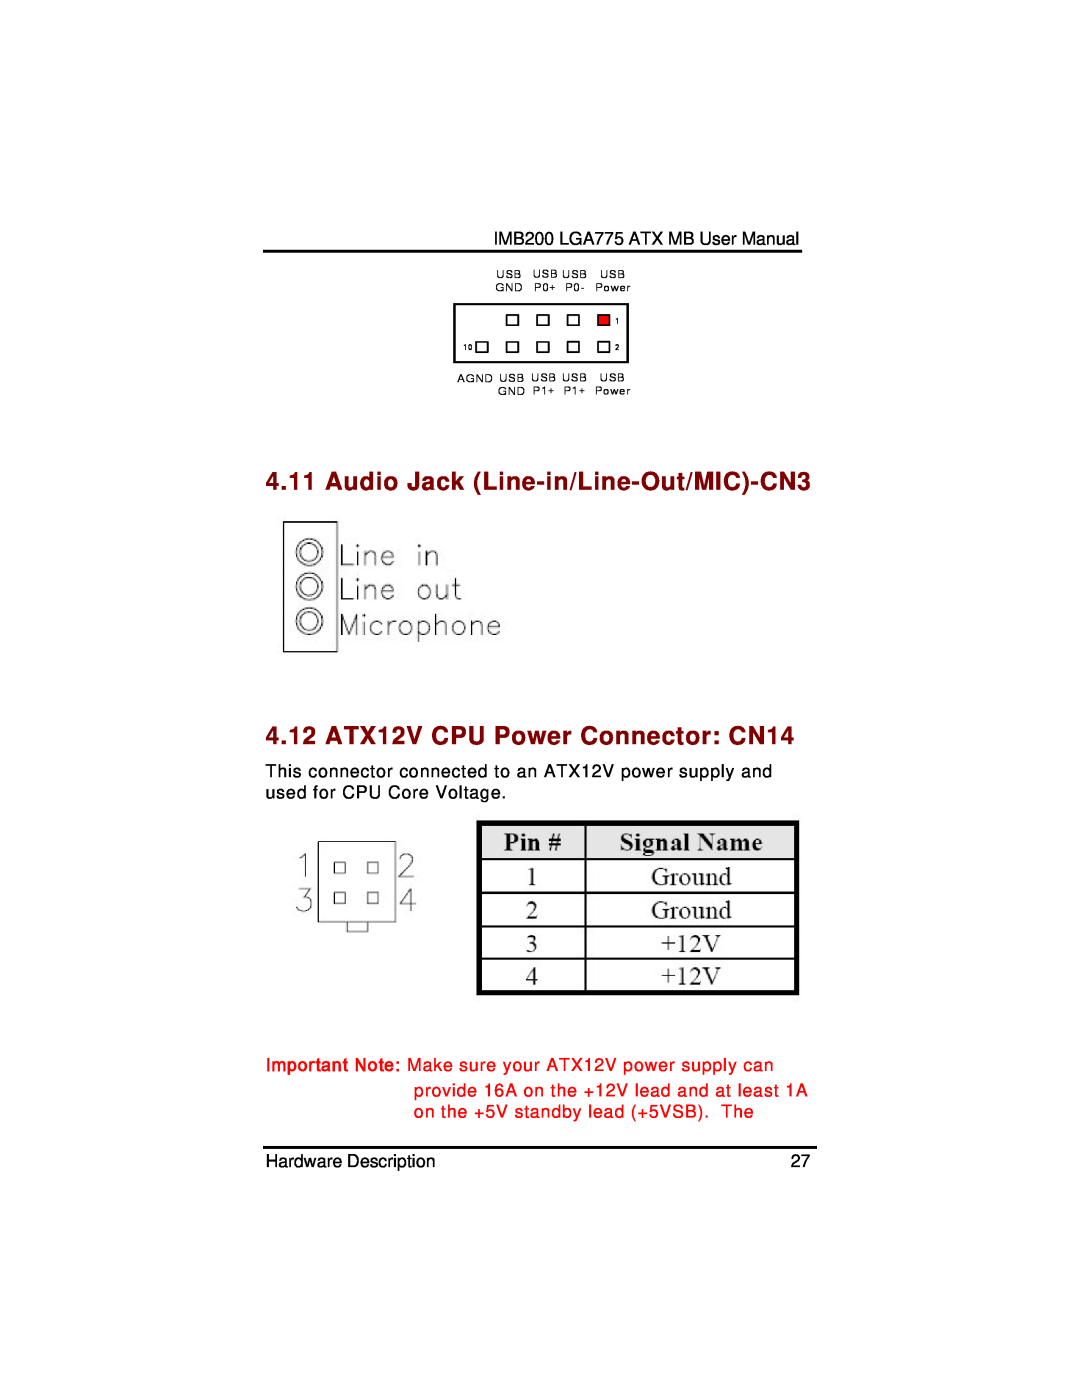 Intel IMB200 Audio Jack Line-in/Line-Out/MIC-CN3, 4.12 ATX12V CPU Power Connector CN14, USB USB USB USB GND P0+ P0- Power 